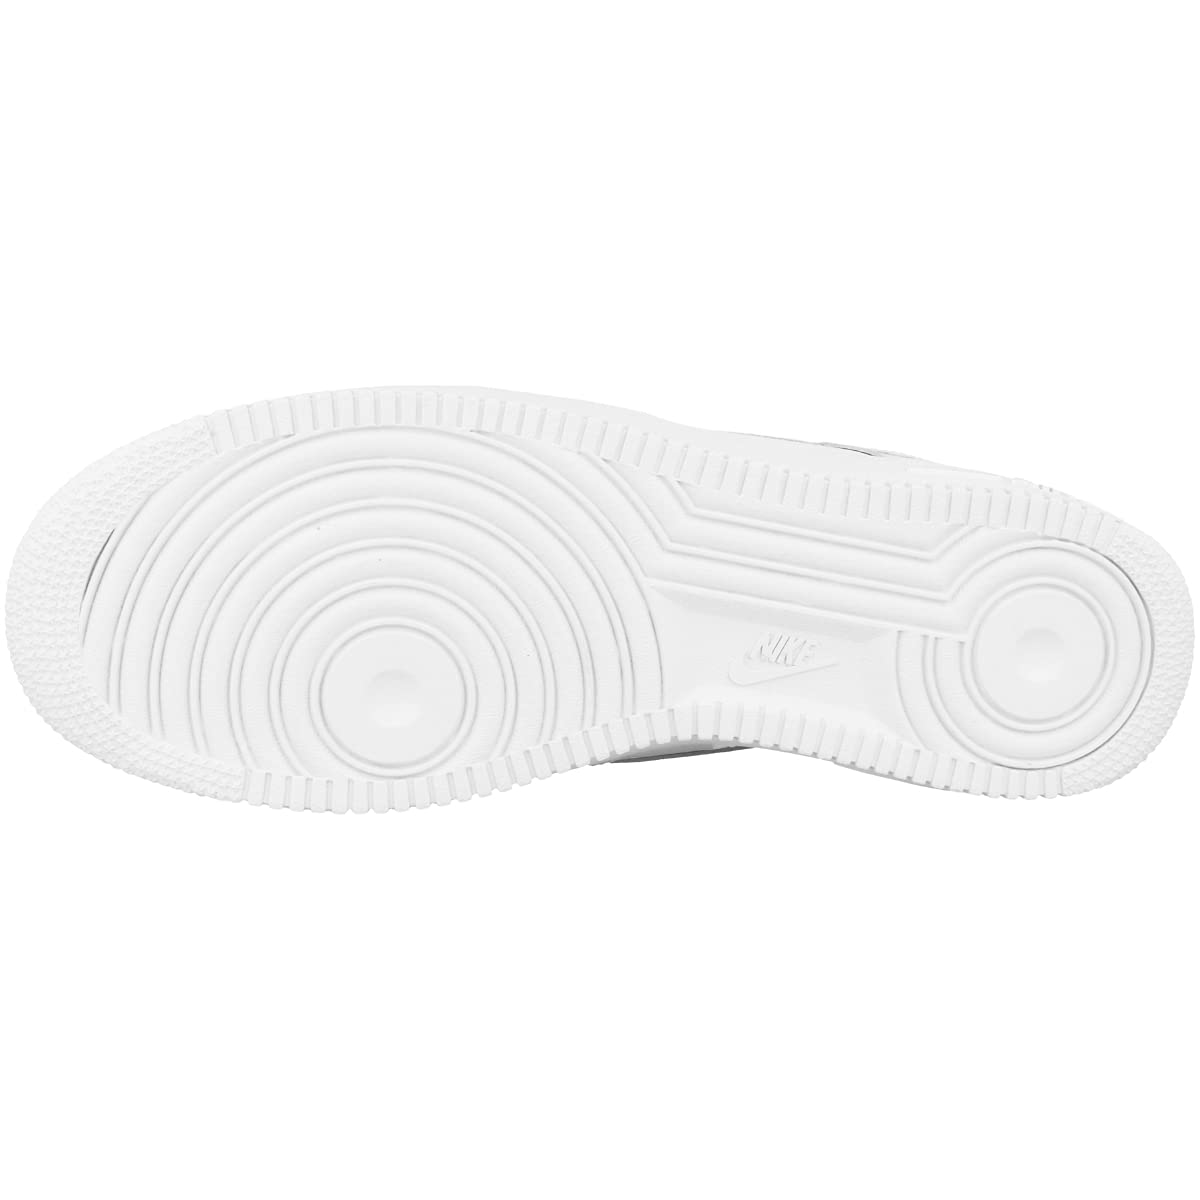 Nike Men's Basketball Shoes, White/White, 9